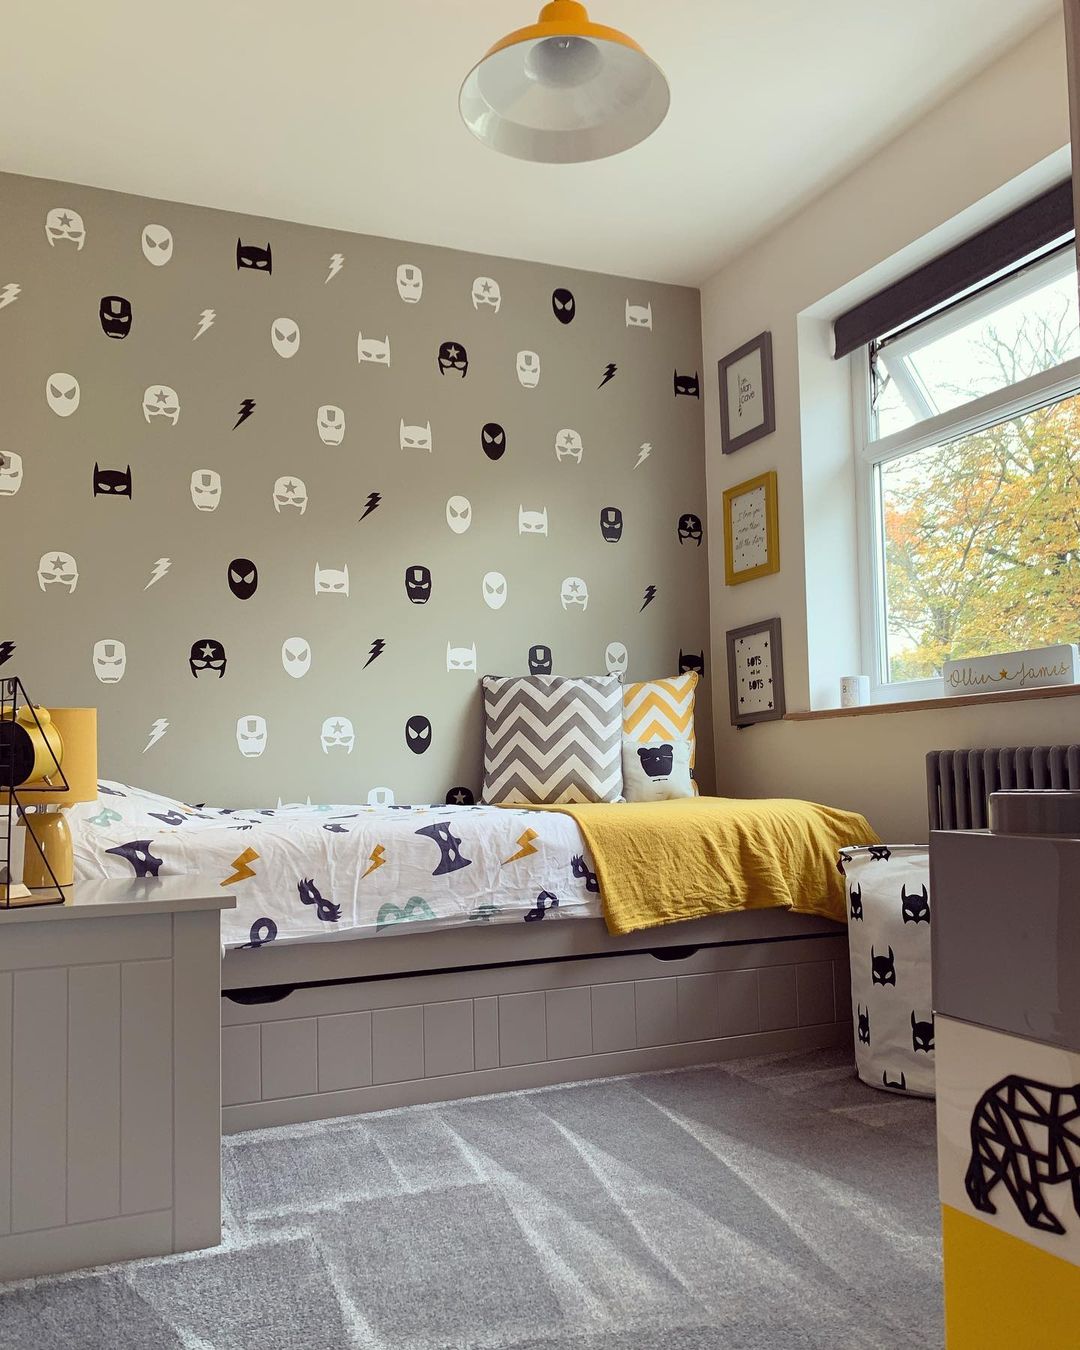 Boys bedroom with superhero wallpaper and decor.